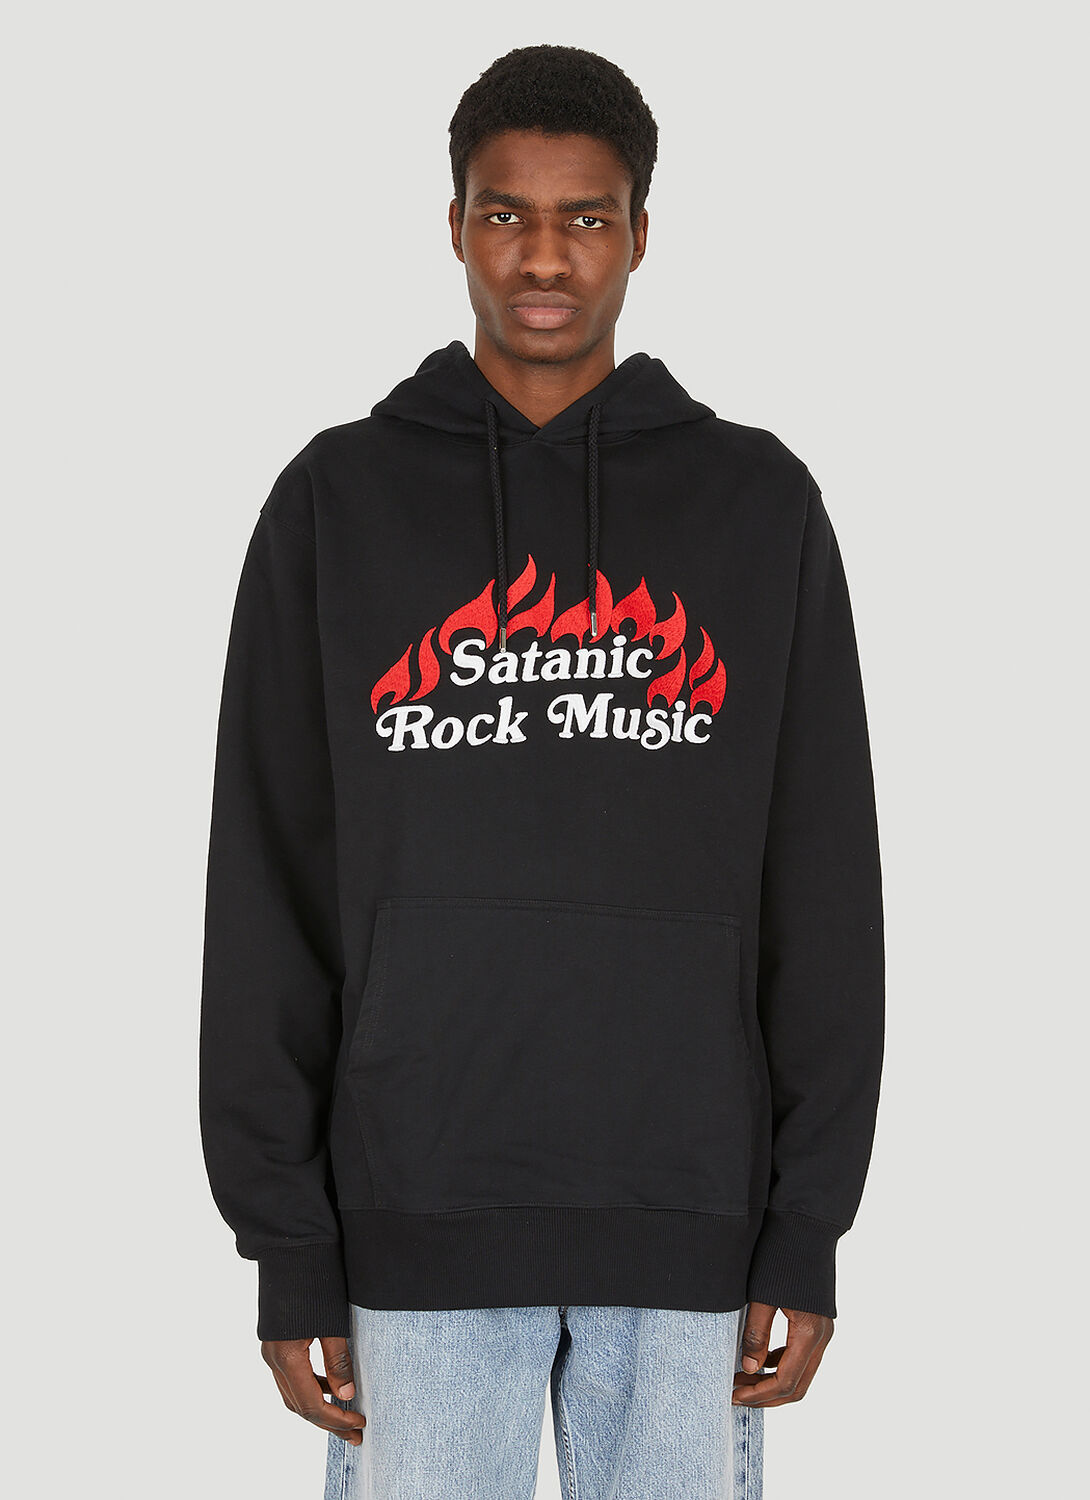 Assid Satanic Rock Music Hooded Sweatshirt